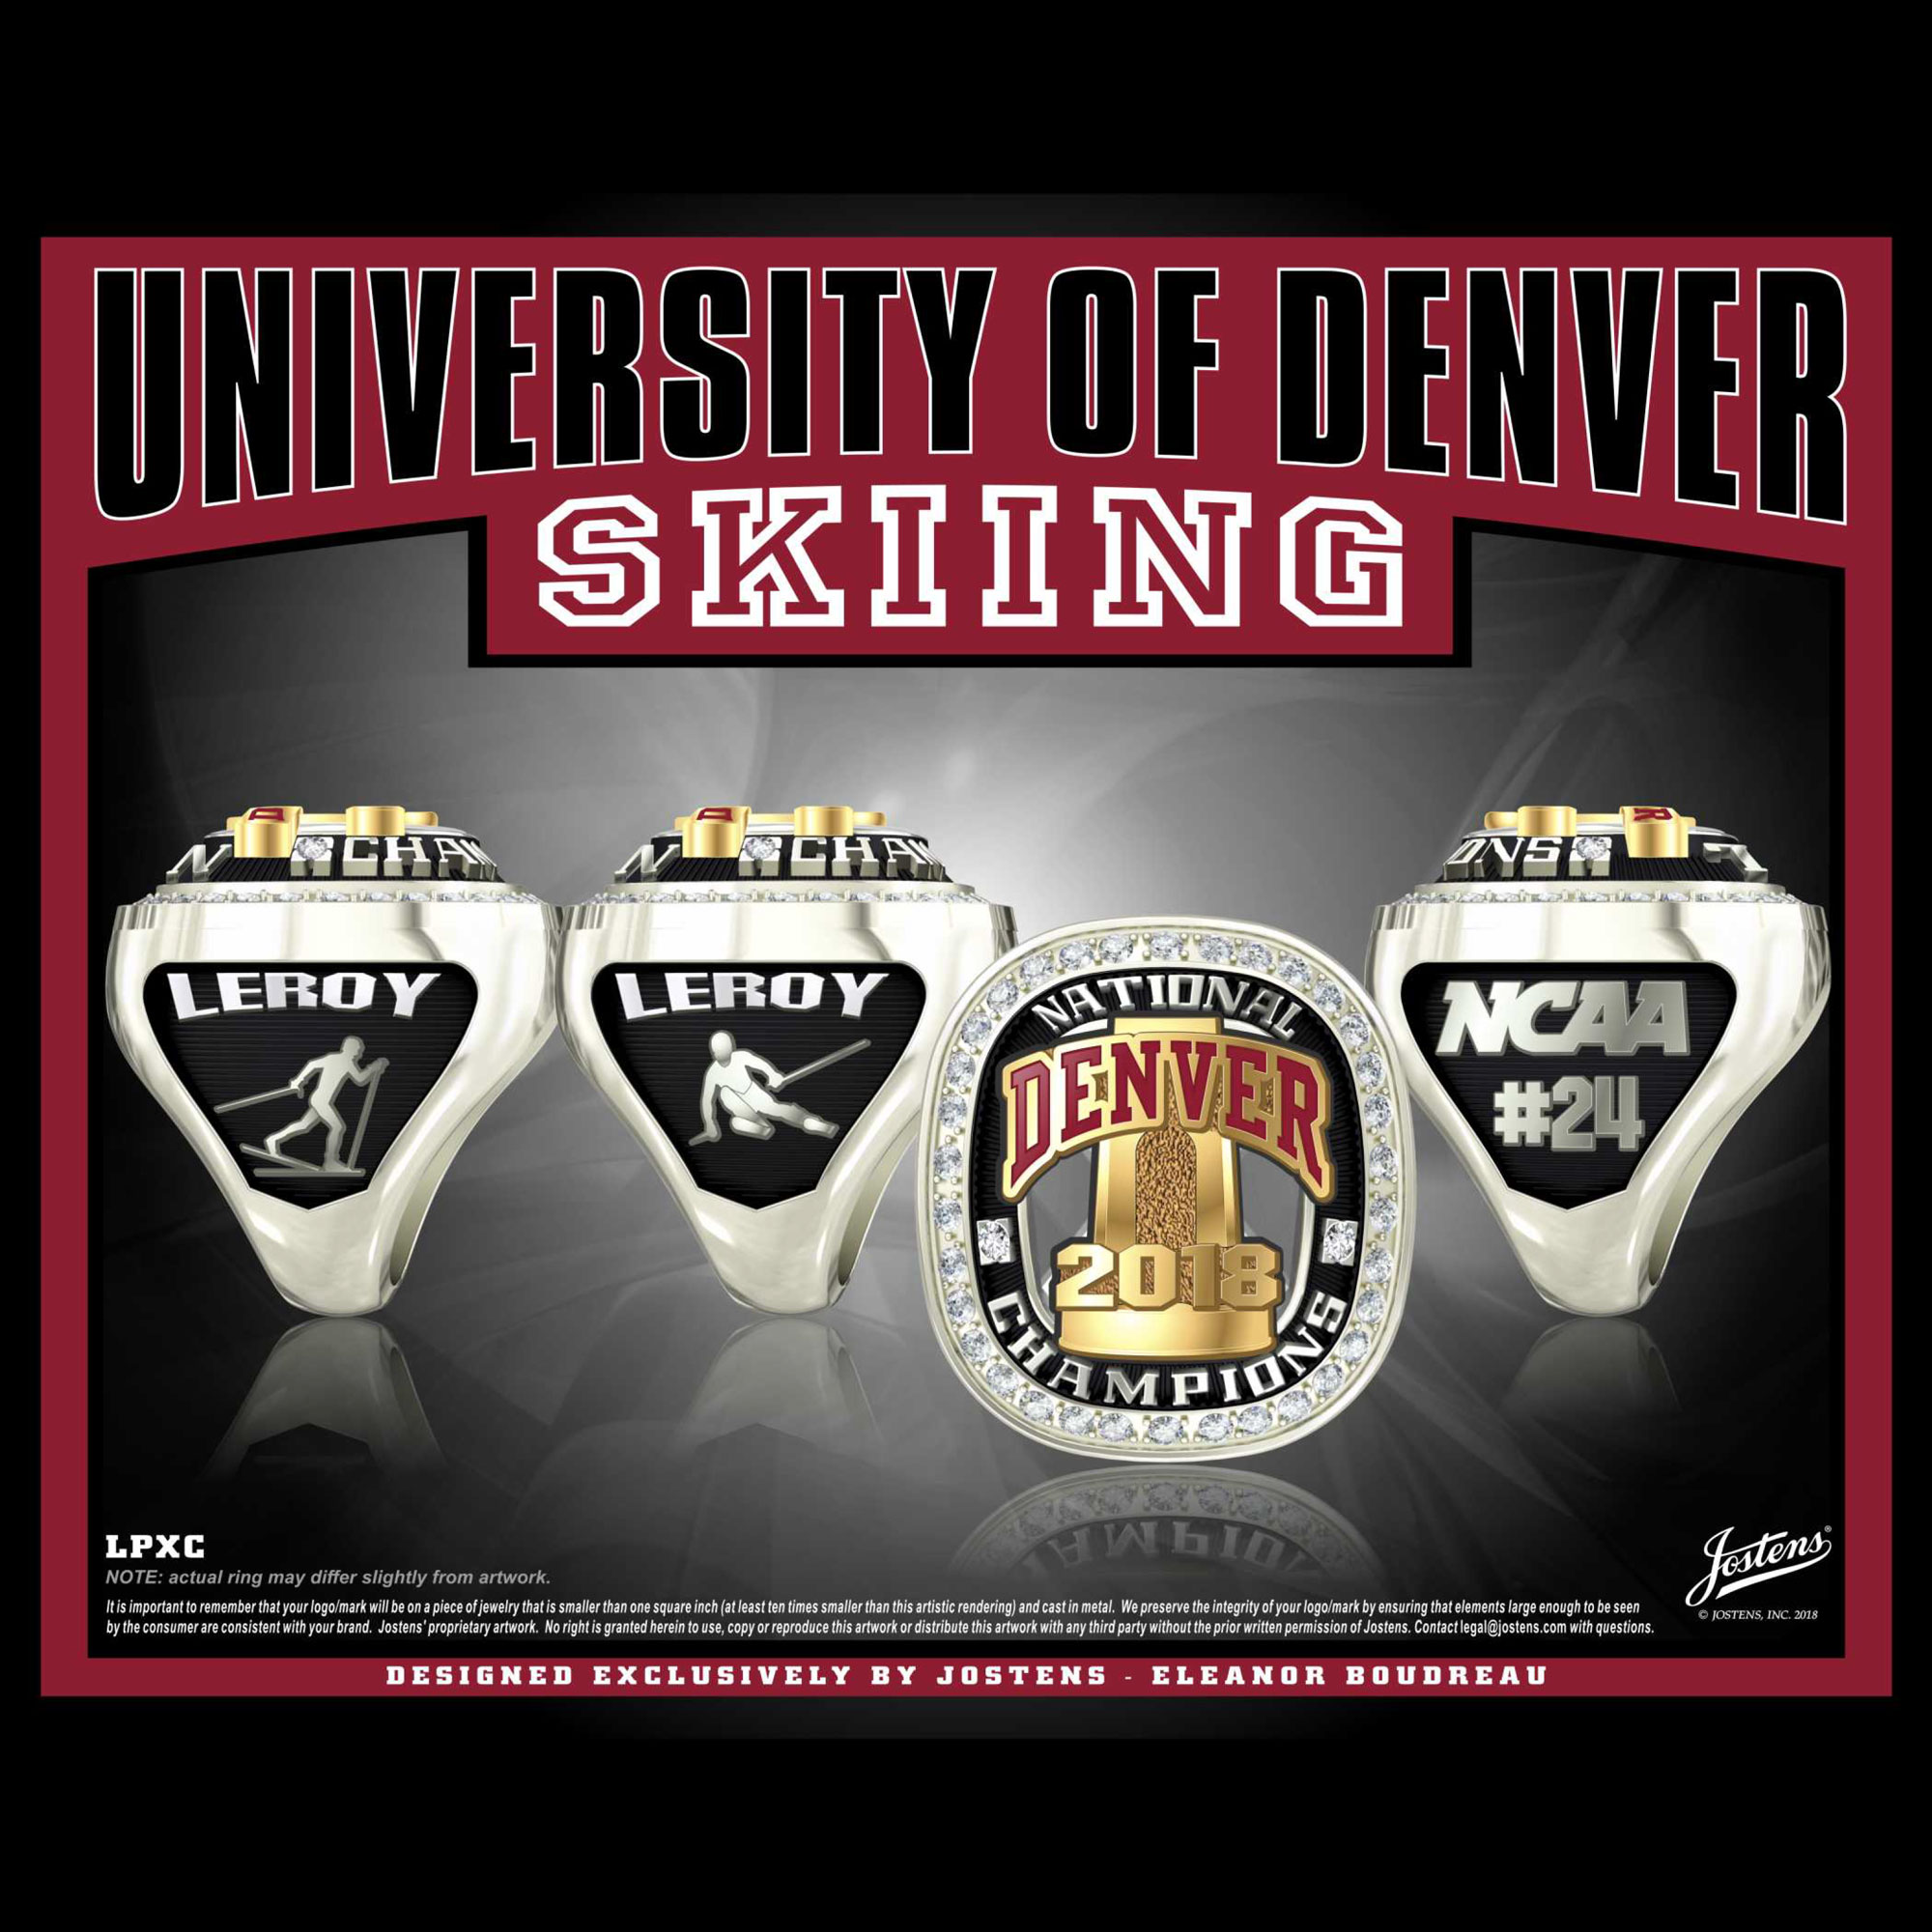 University of Denver Coed Skiing 2018 National Championship Ring